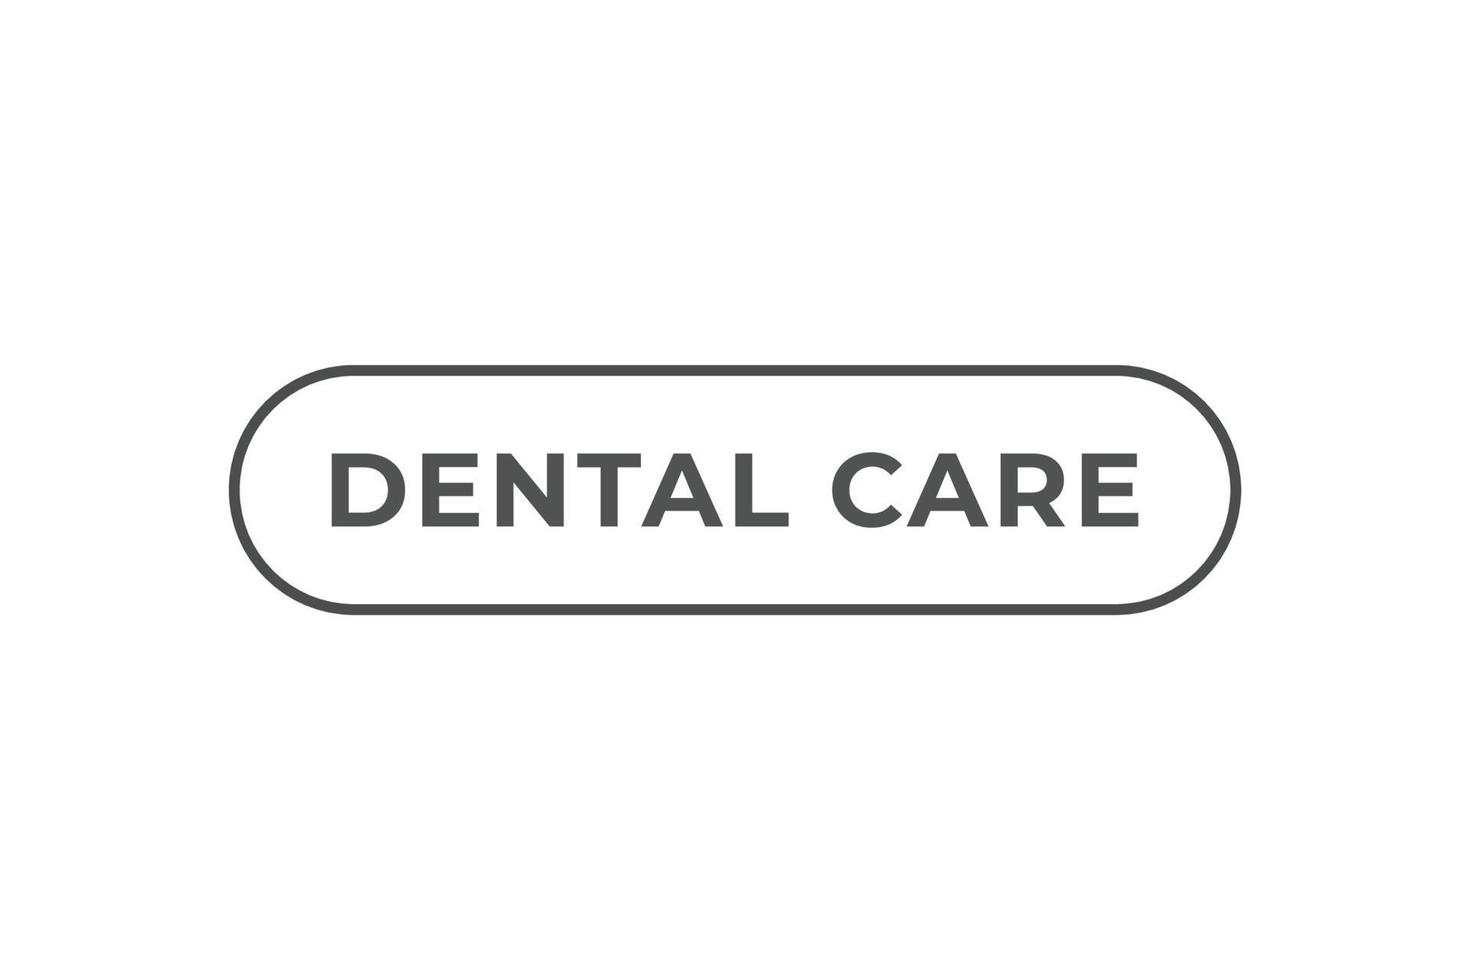 Dental Pflege Taste. Rede Blase, Banner Etikette Dental Pflege vektor